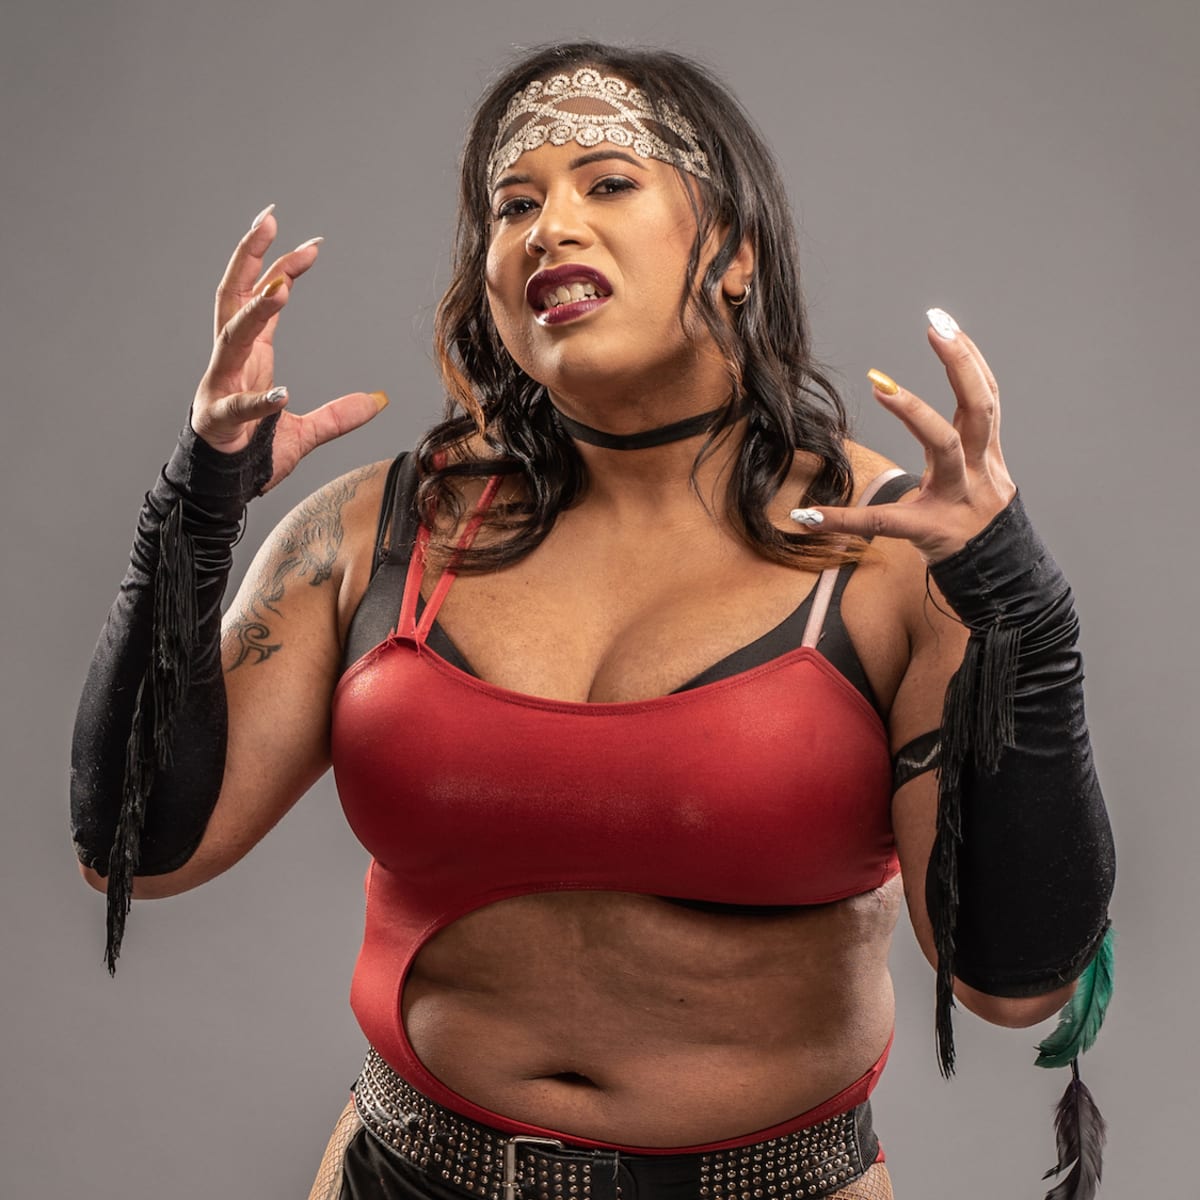 Nyla Rose AEW wrestler makes history as transgender performer picture photo